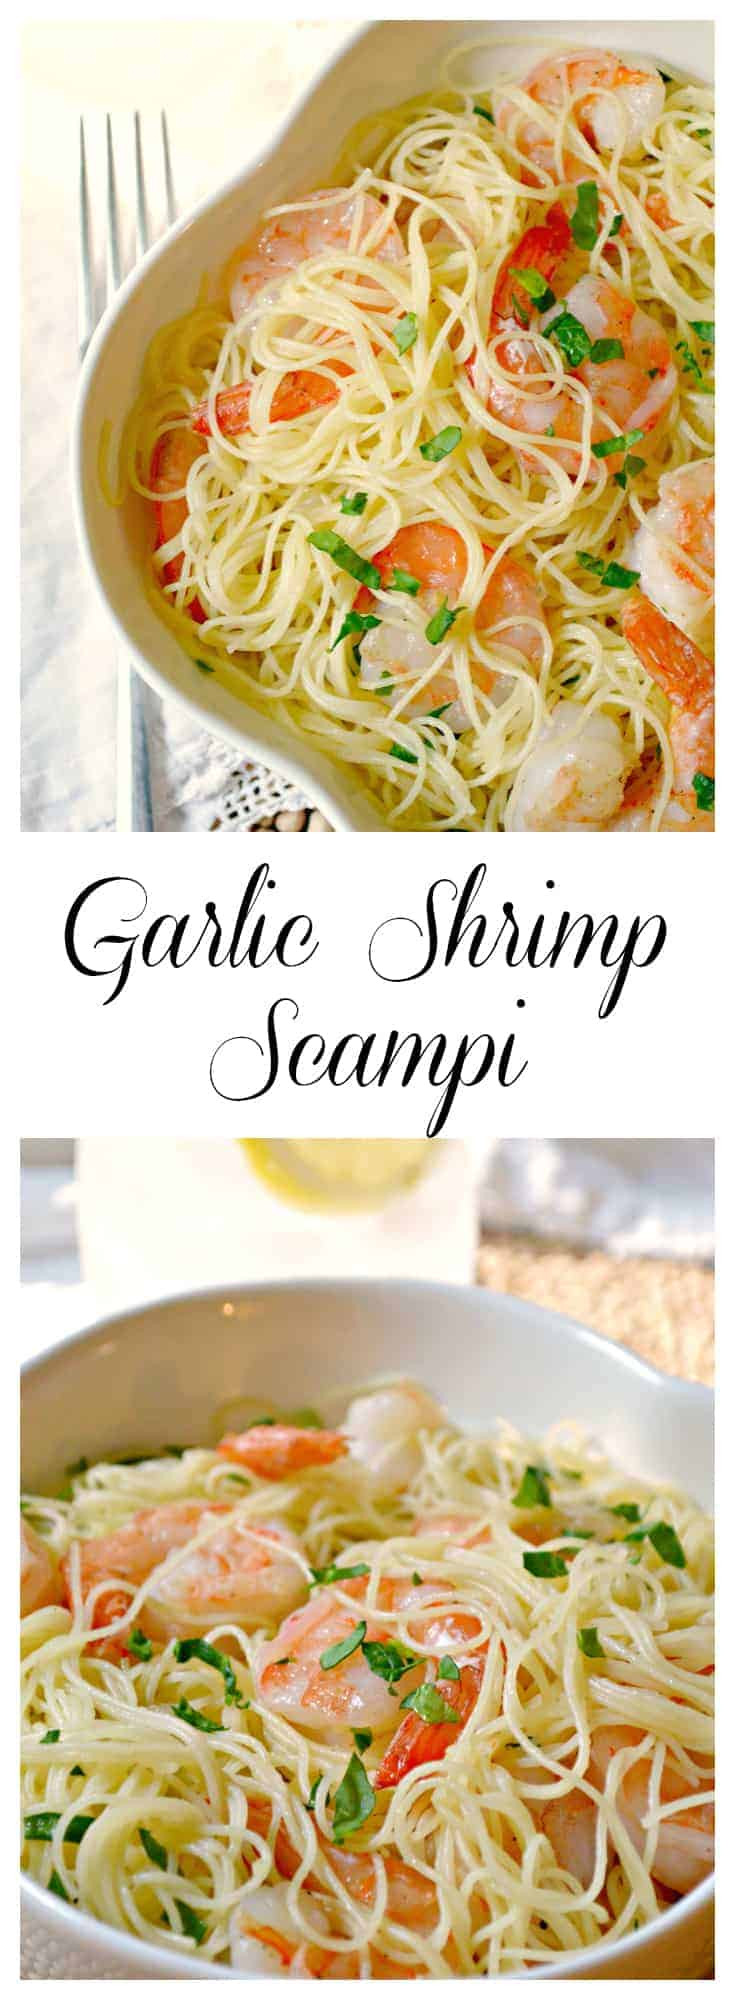 Shrimp Scampi Appetizer
 Garlic Shrimp Scampi